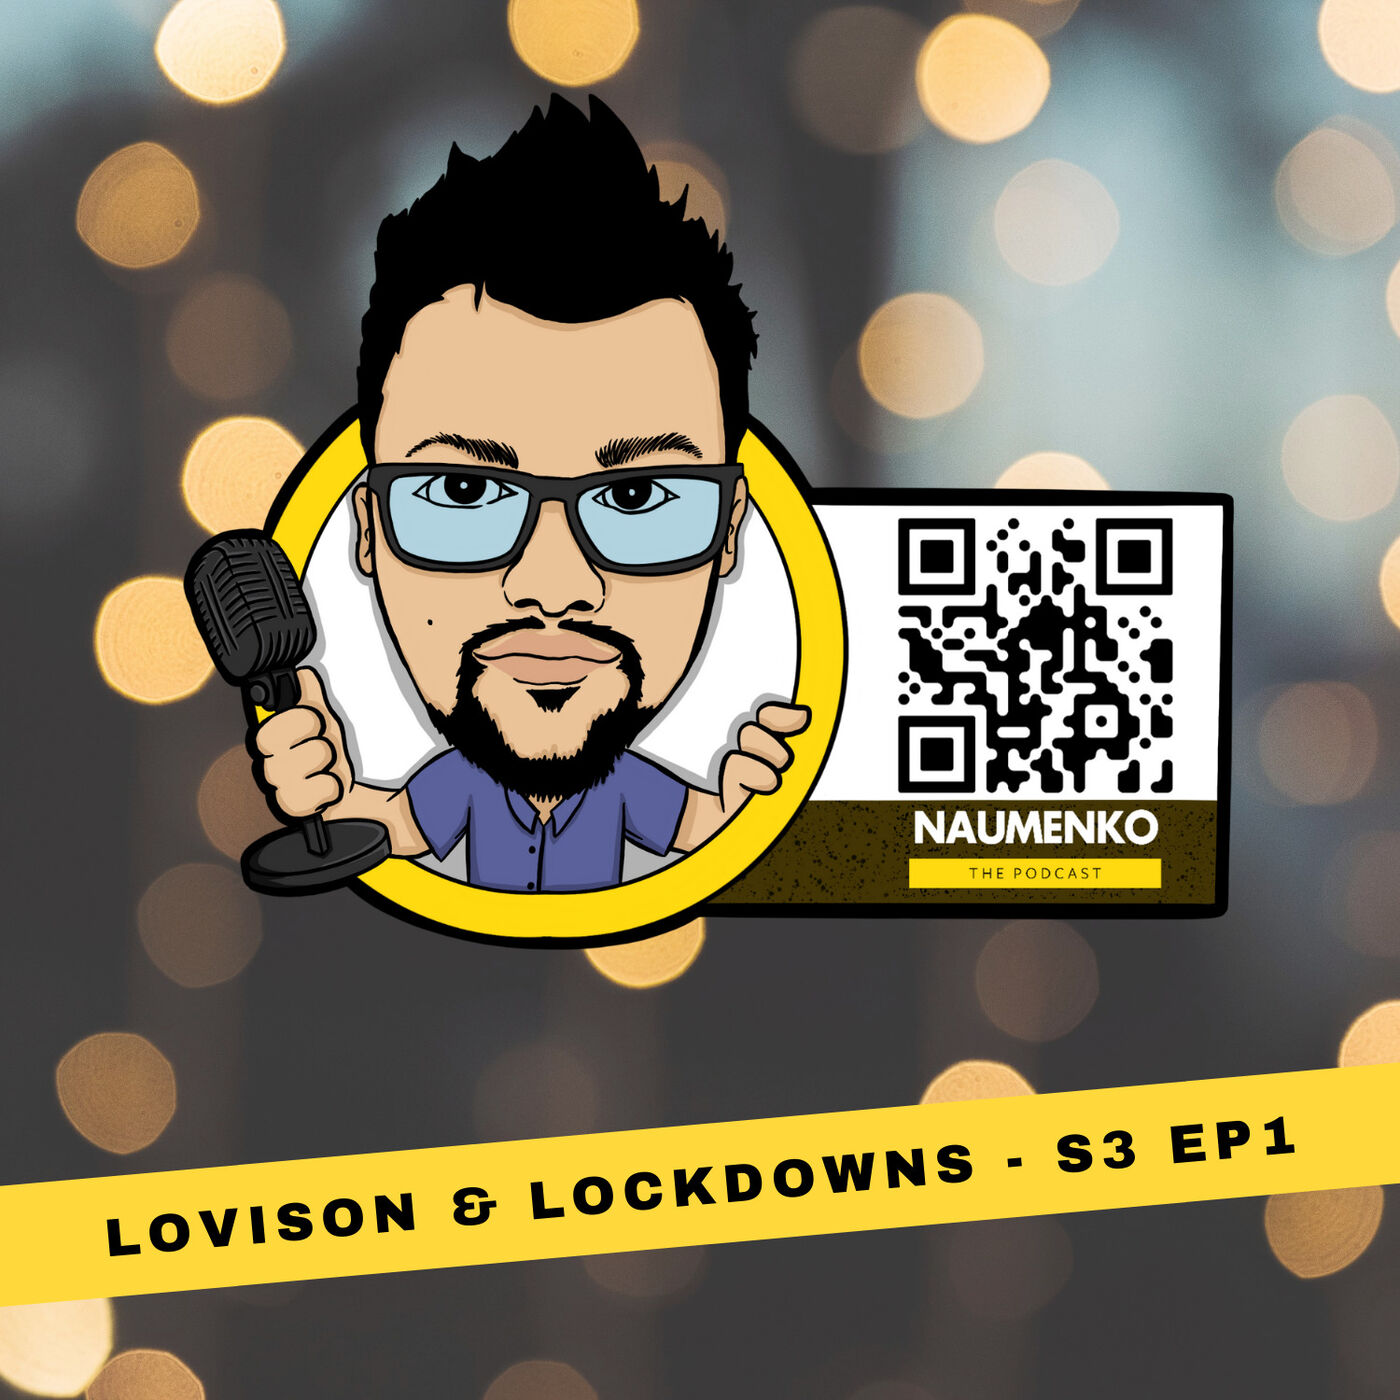 Lovison & Lockdowns